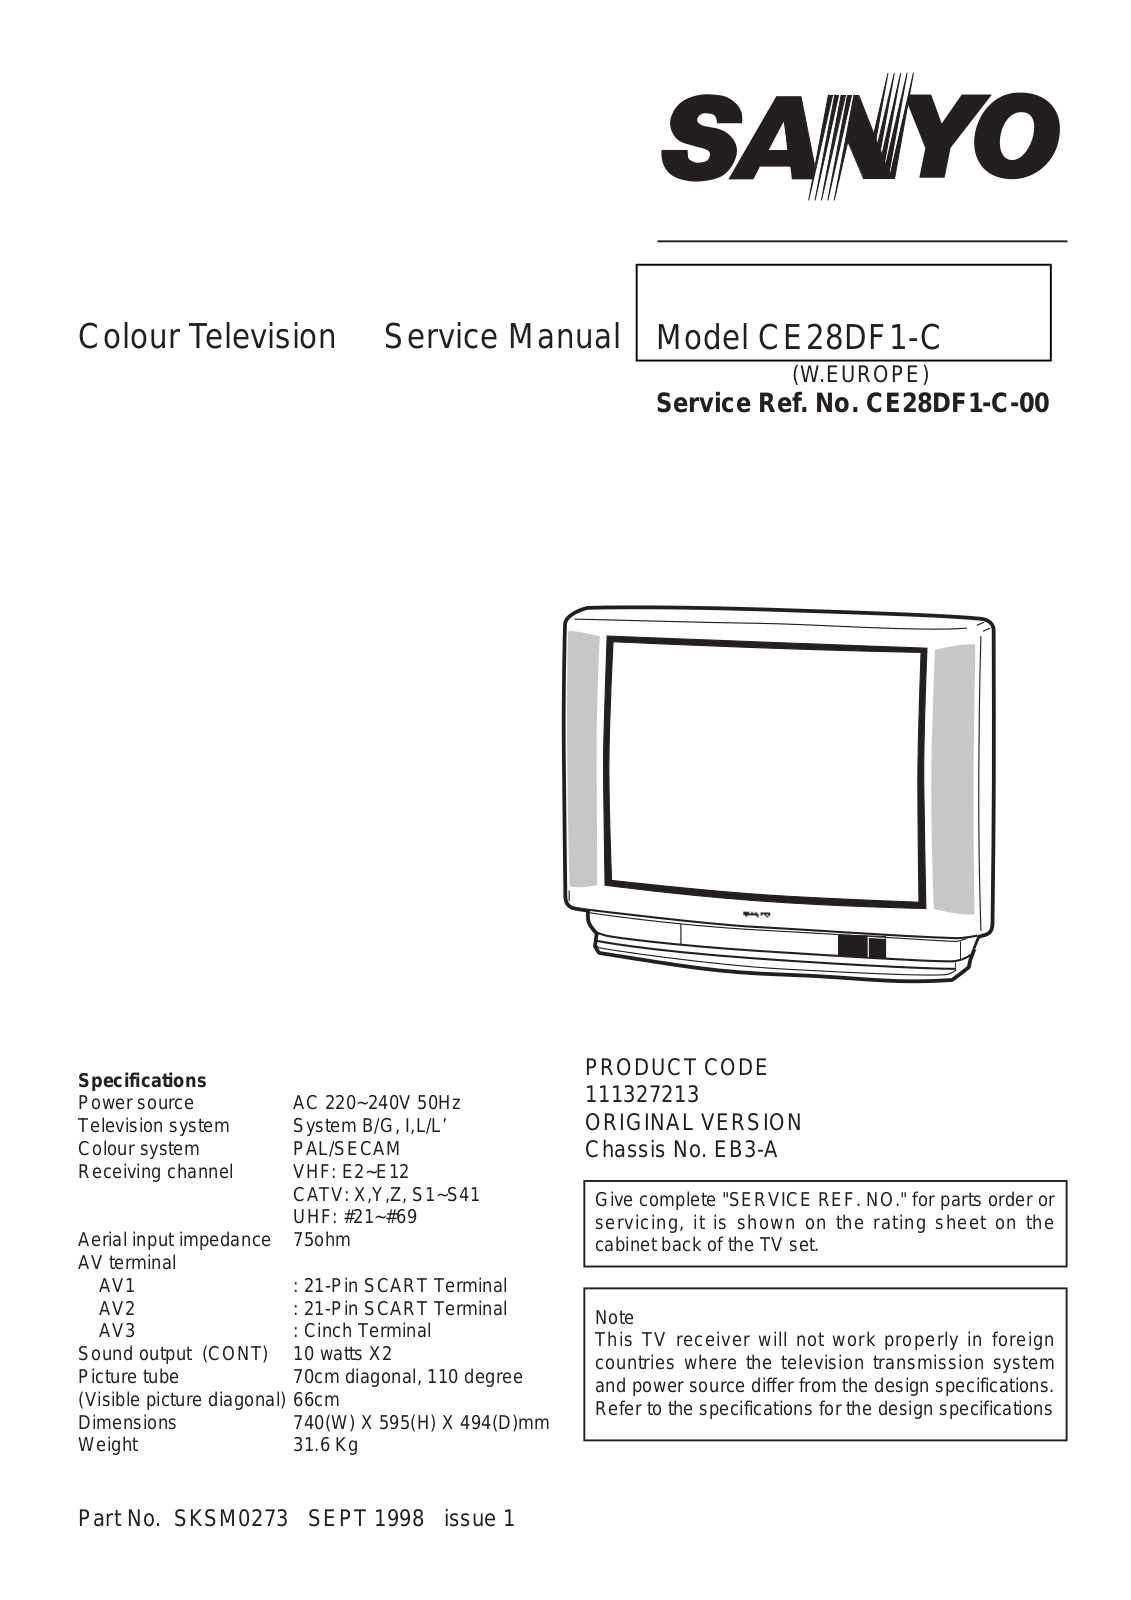 SANYO CE28DF1-C Service Manual